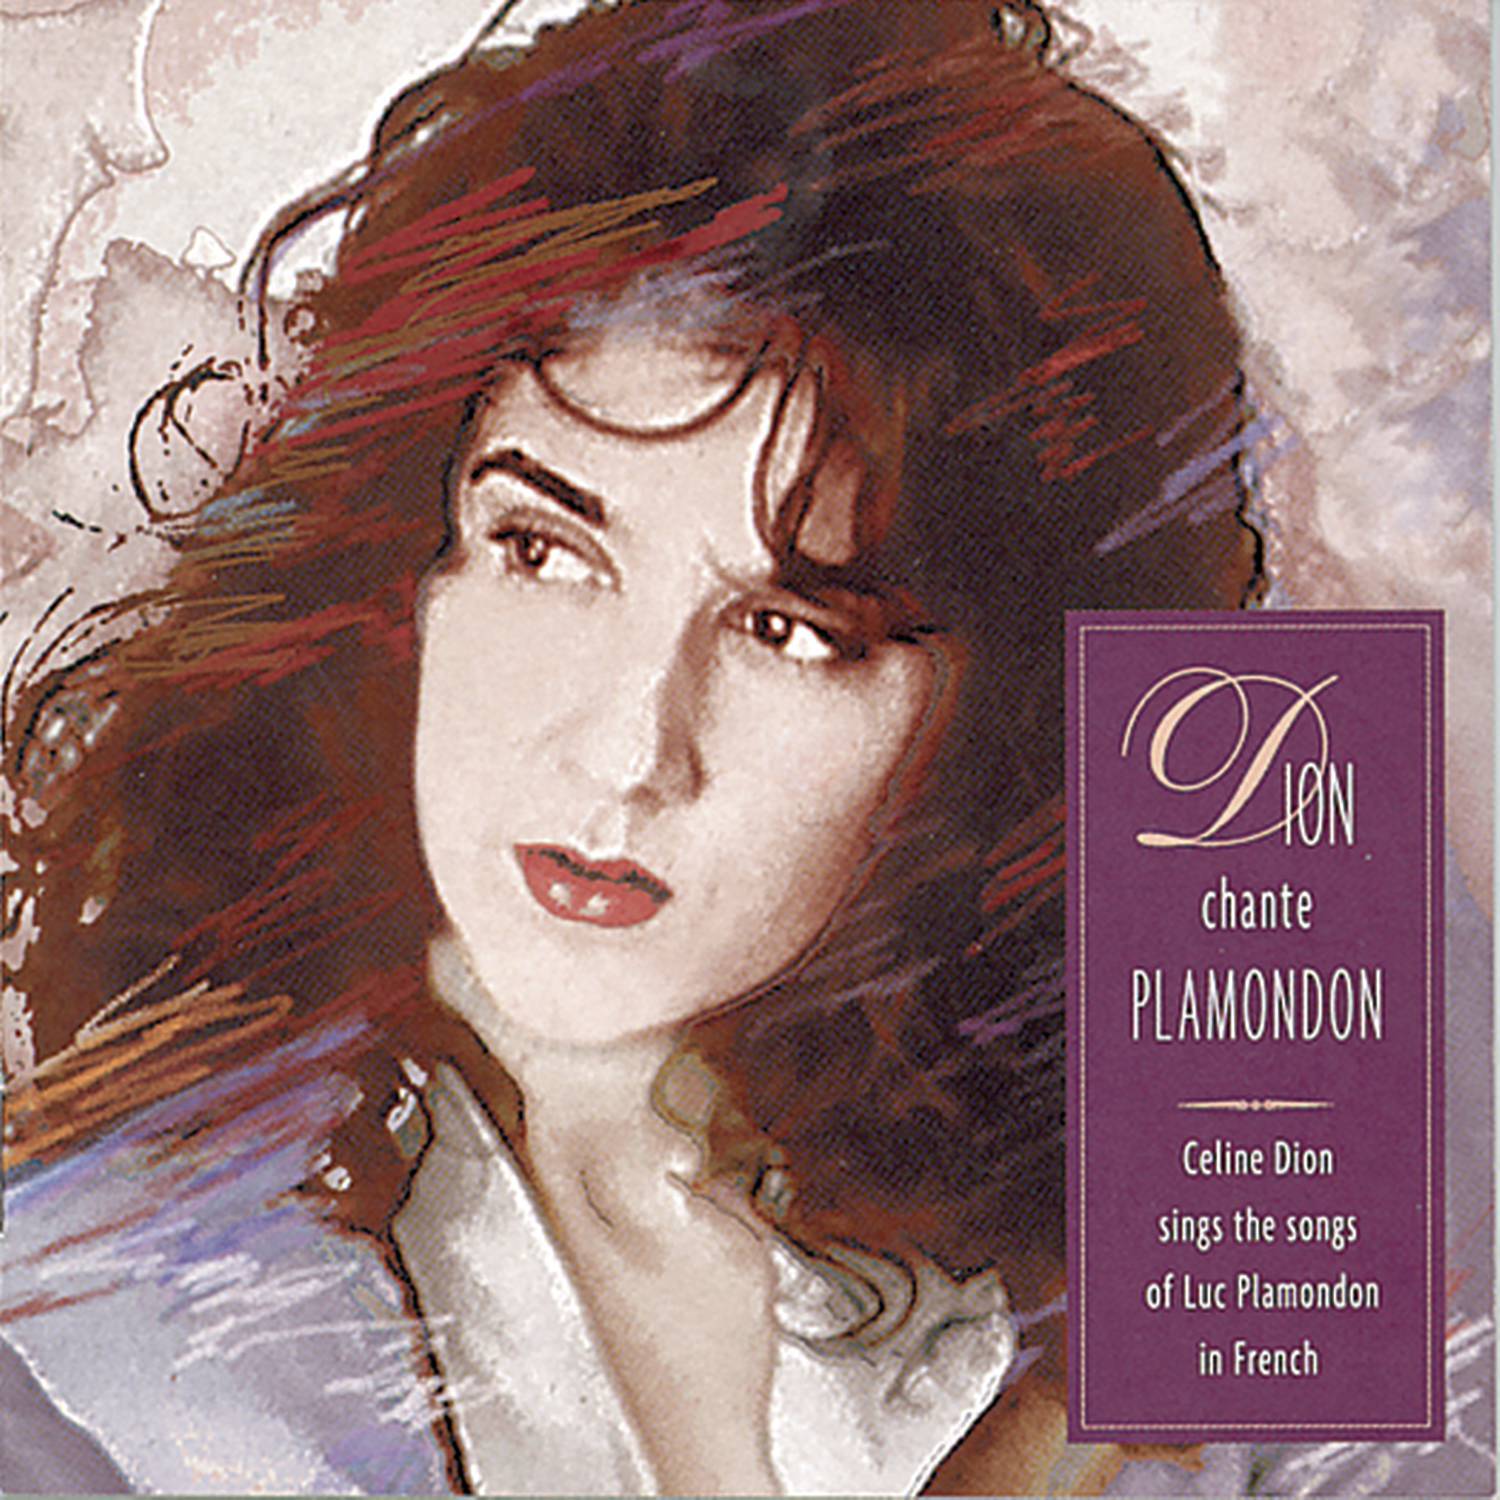 Dion Chante Plamondon - Celine Dion Sings The Songs Of Luc Plamondon